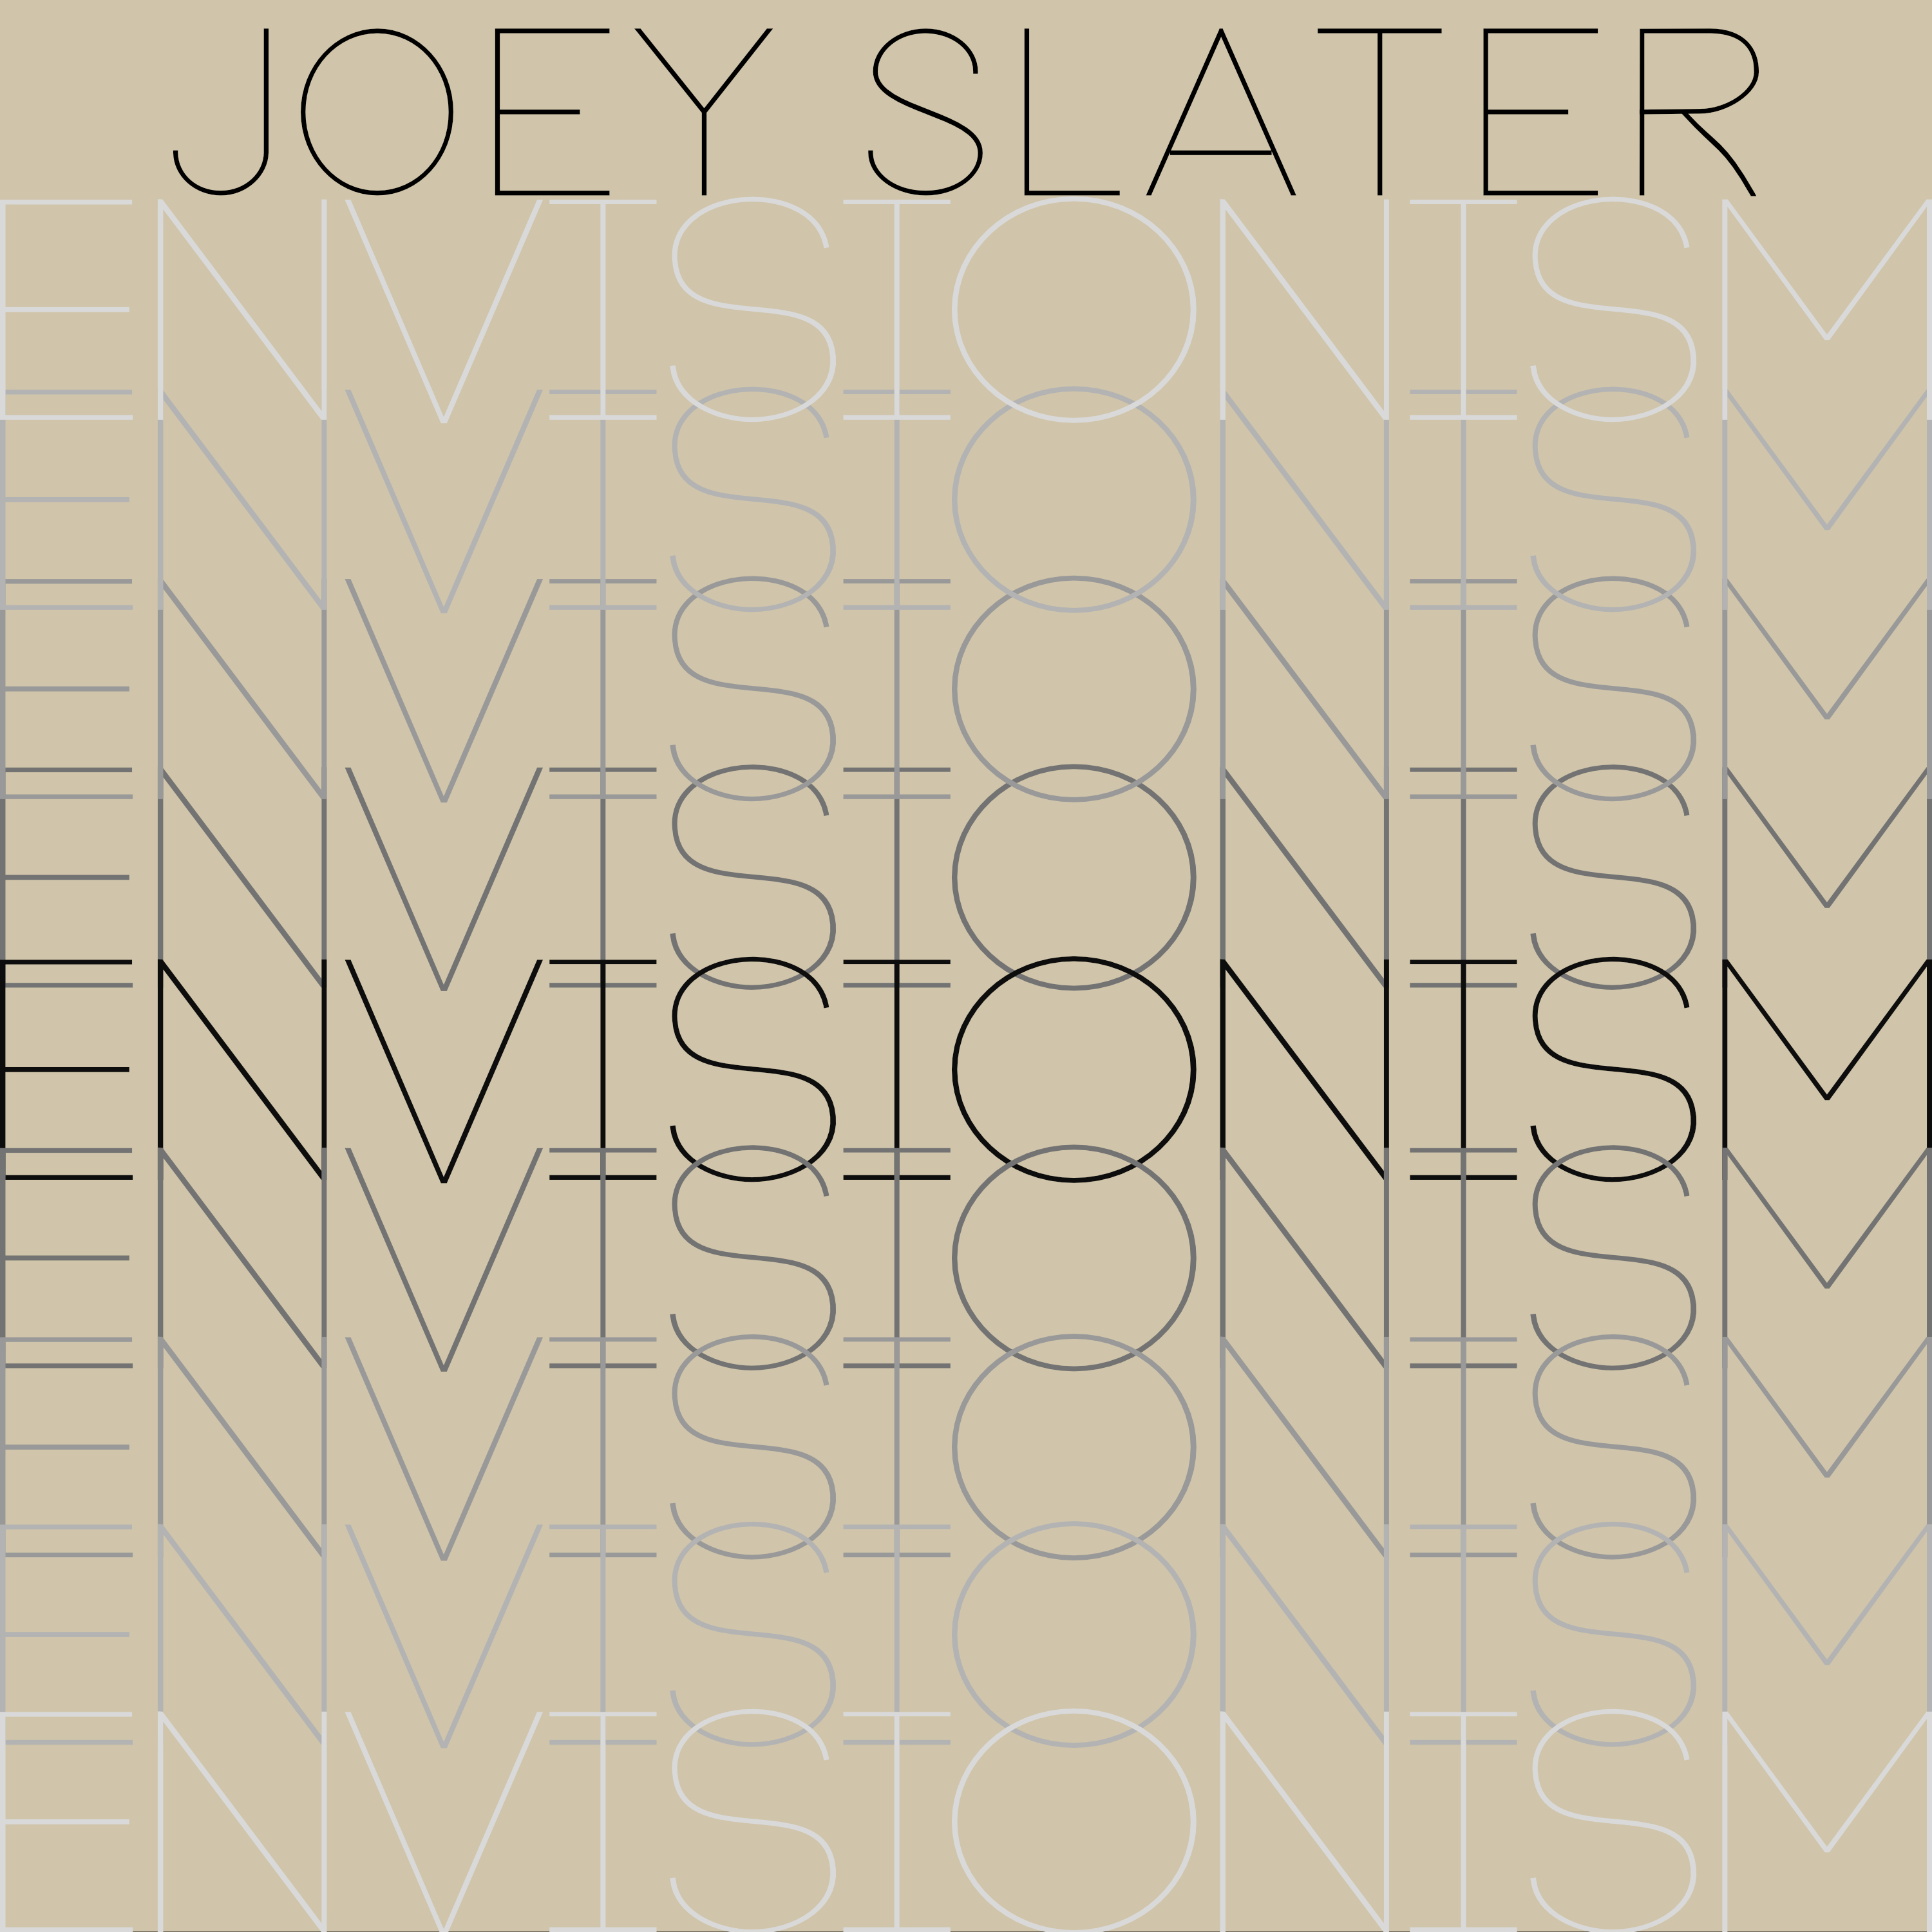 envisionism-album-coming-soon